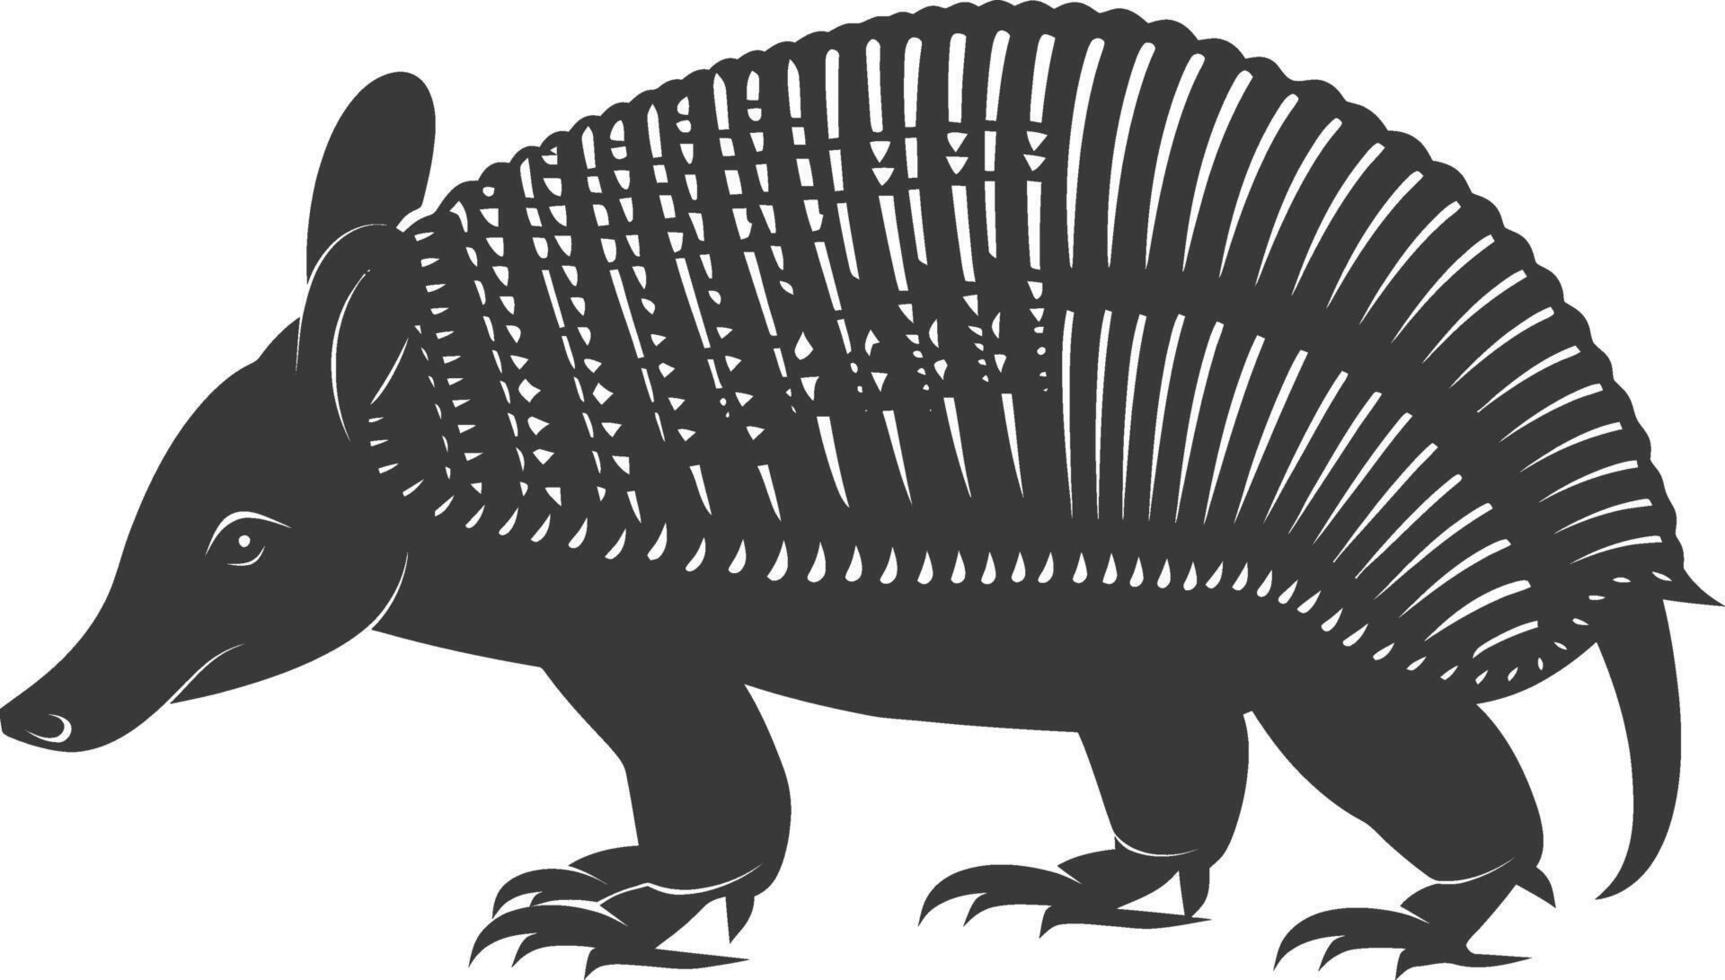 Silhouette Gürteltier Tier schwarz Farbe nur voll Körper vektor